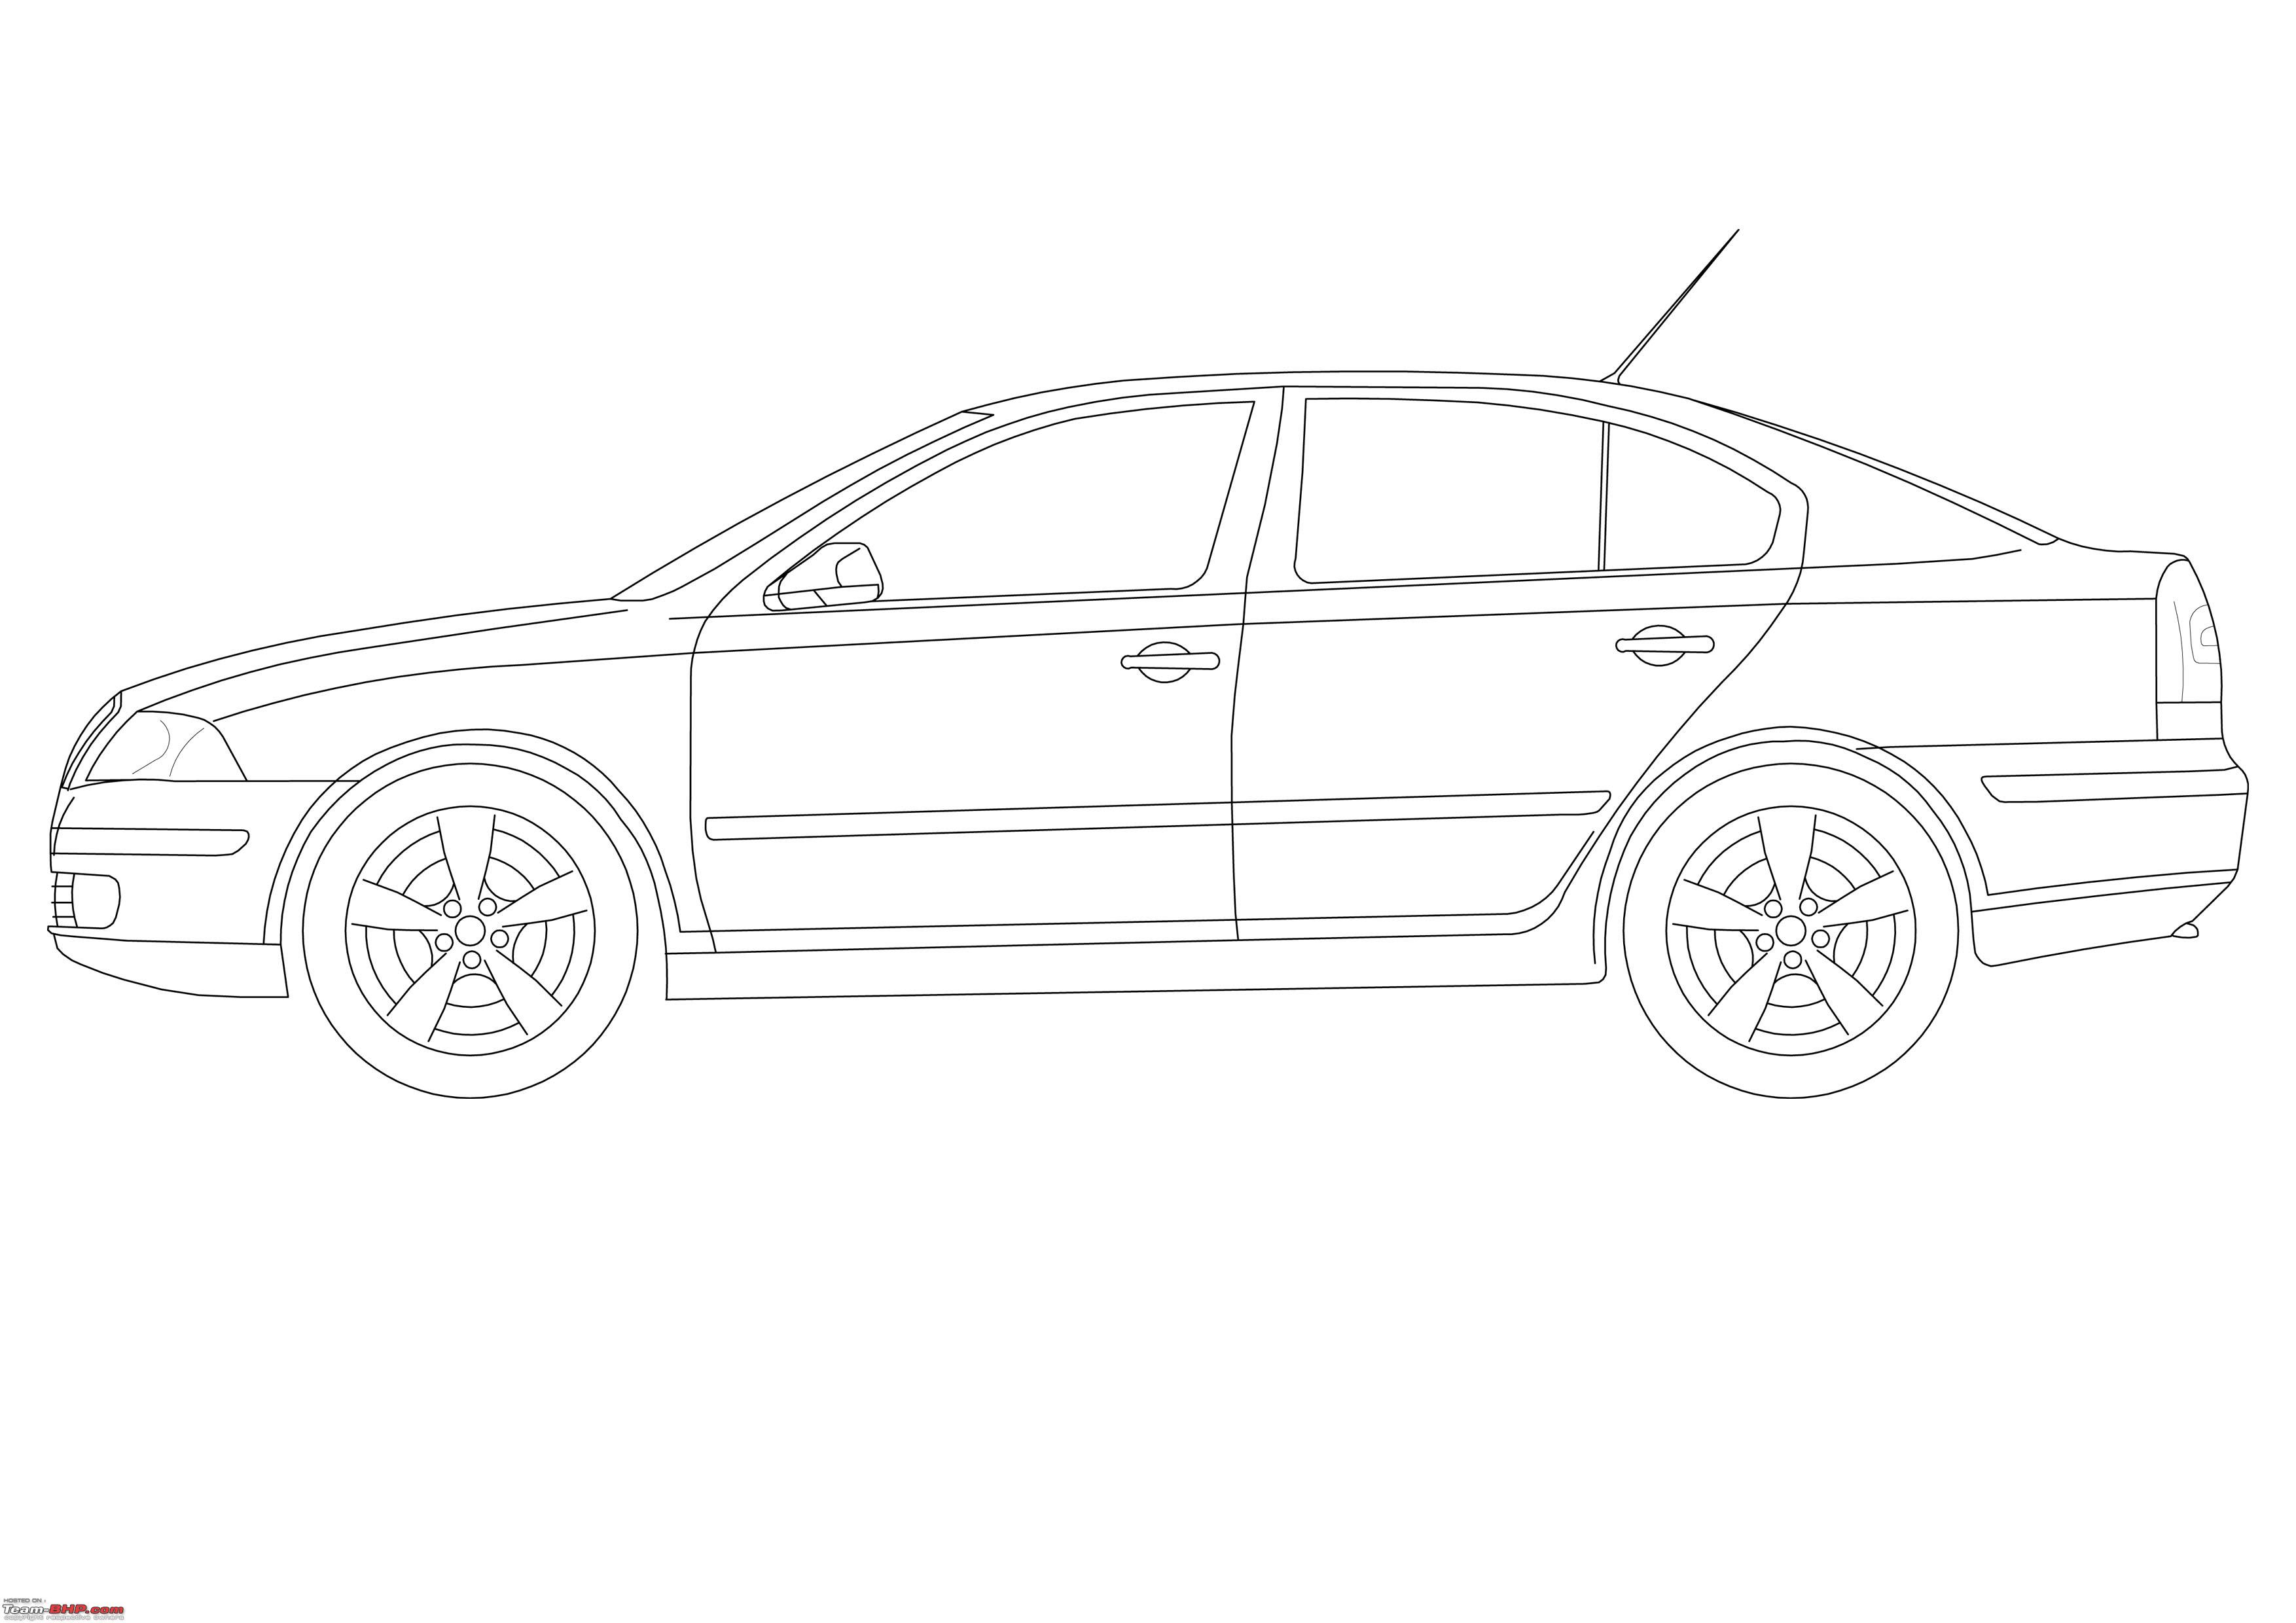 Blueprints / Line-drawings of cars - Team-BHP